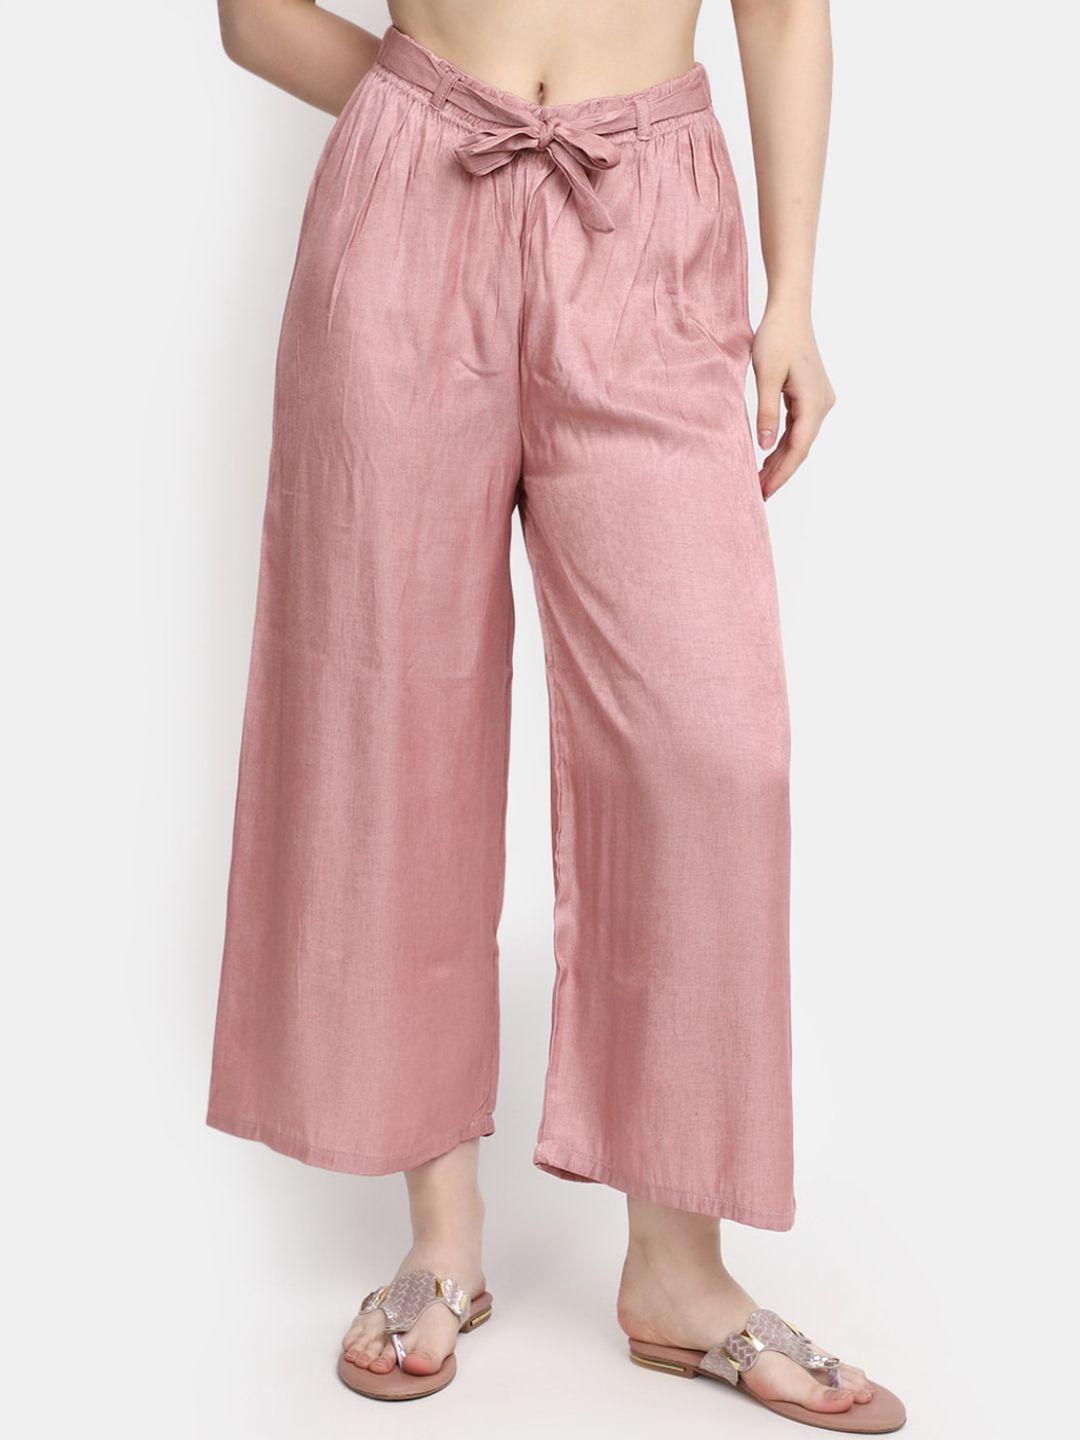 v-mart women mid rise cotton parallel trousers